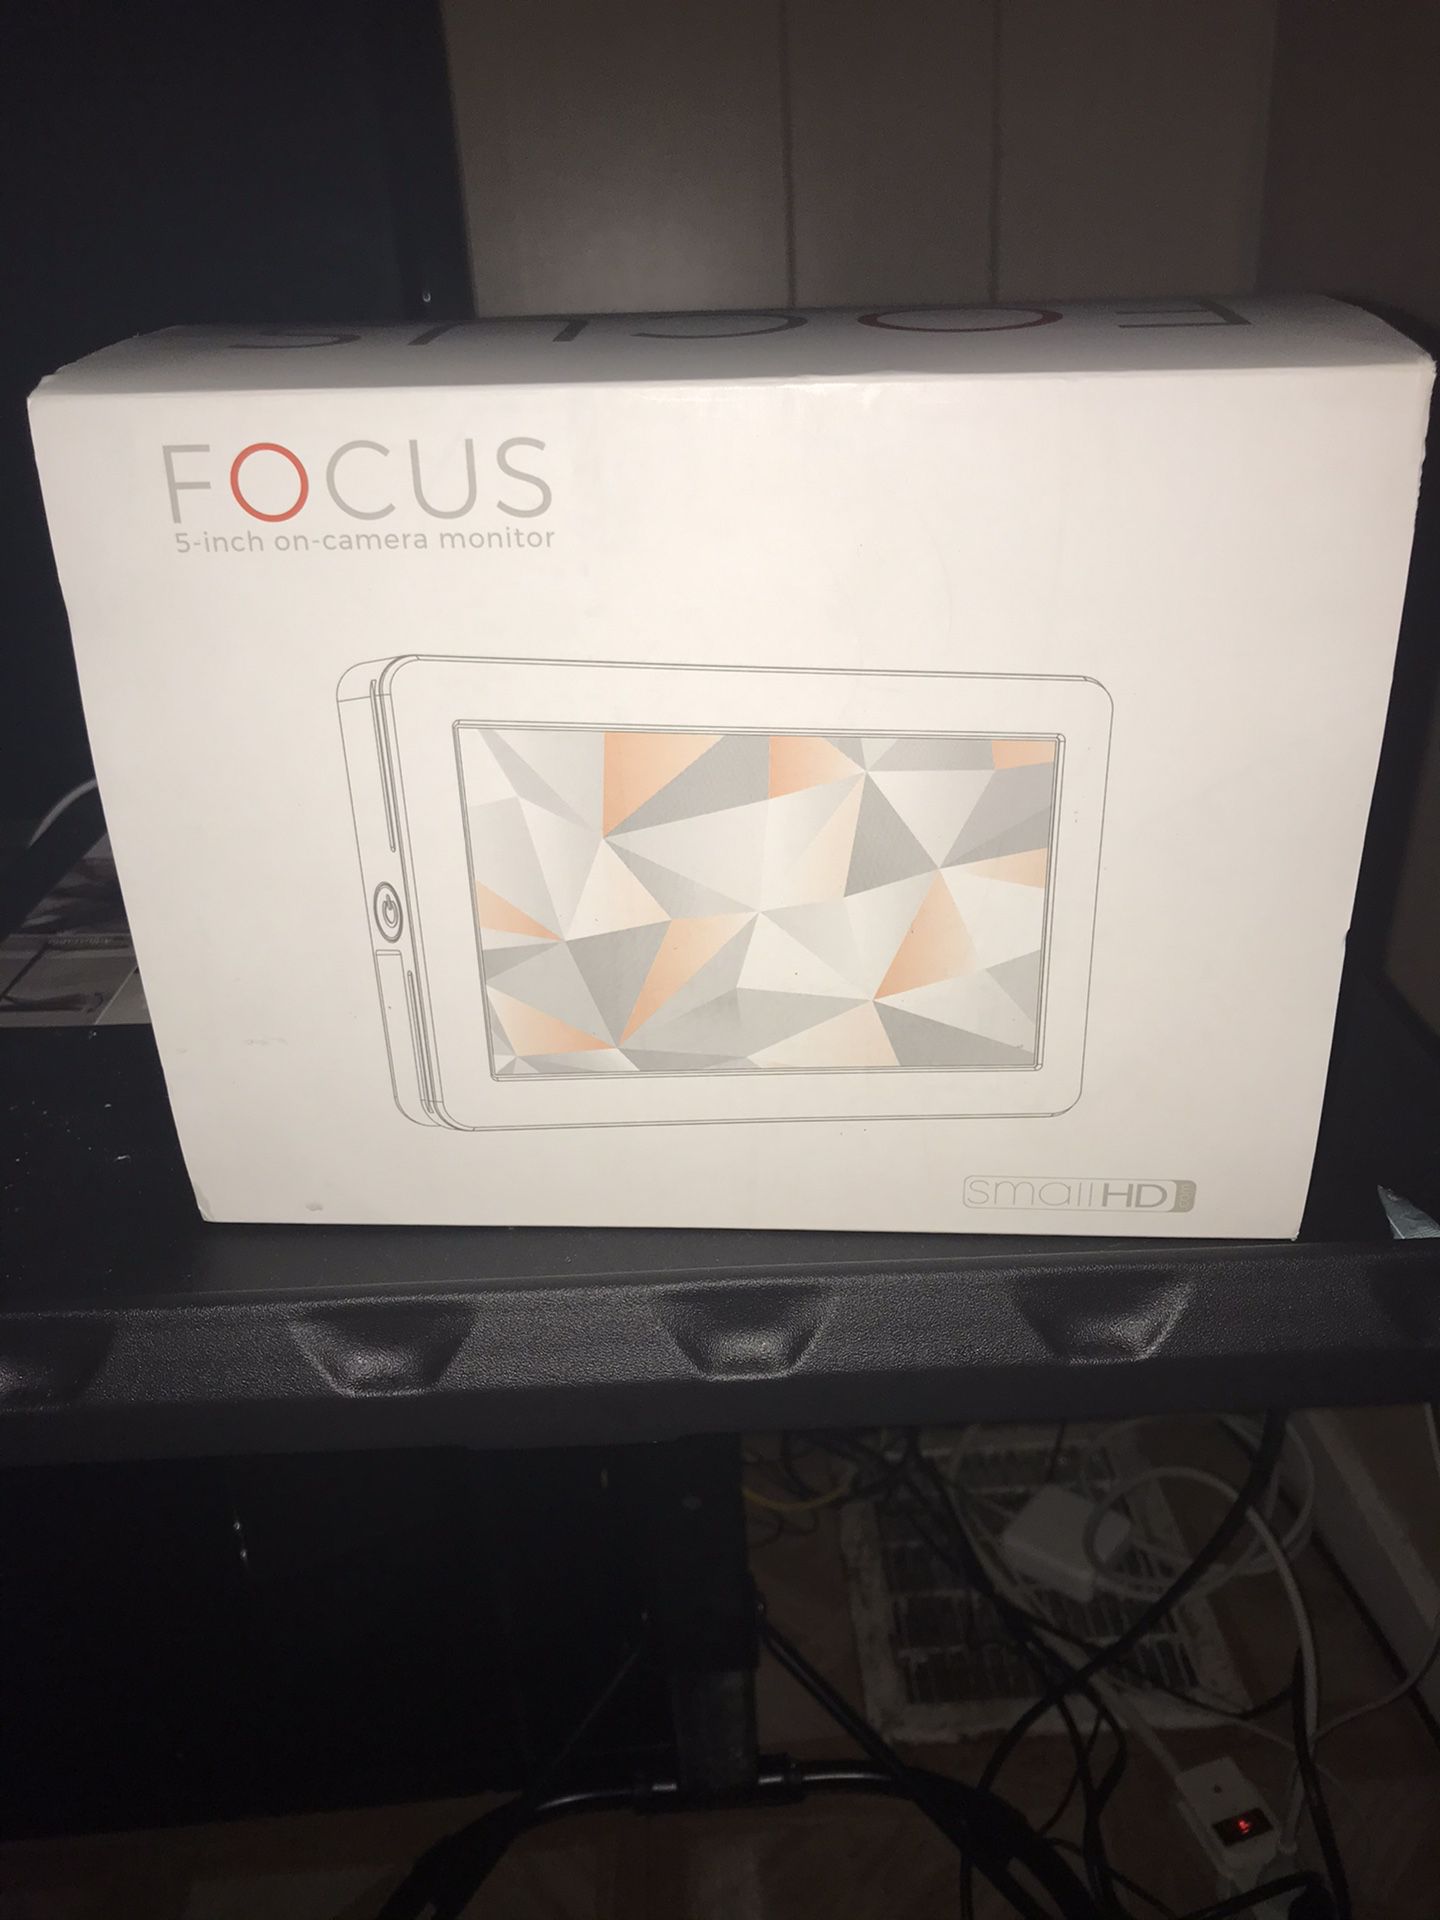 FOCUS 5-inch on-camera monitor